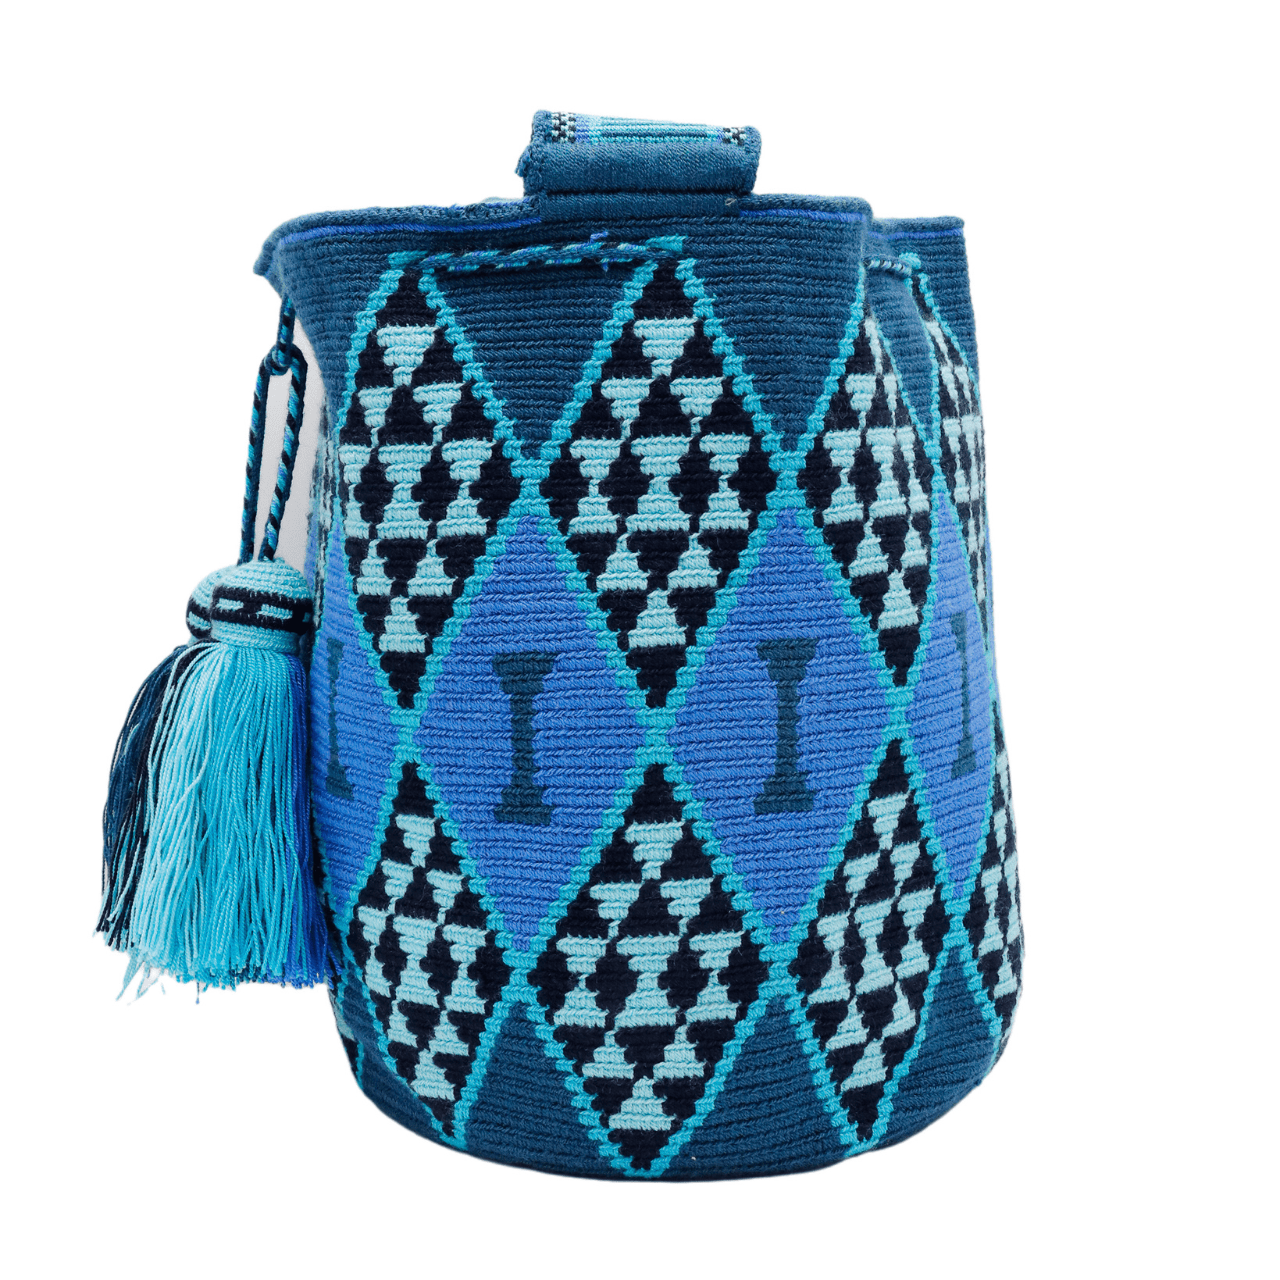 Flora Wayuu bags showcasing a range of blue shades and distinctive diamond patterns.